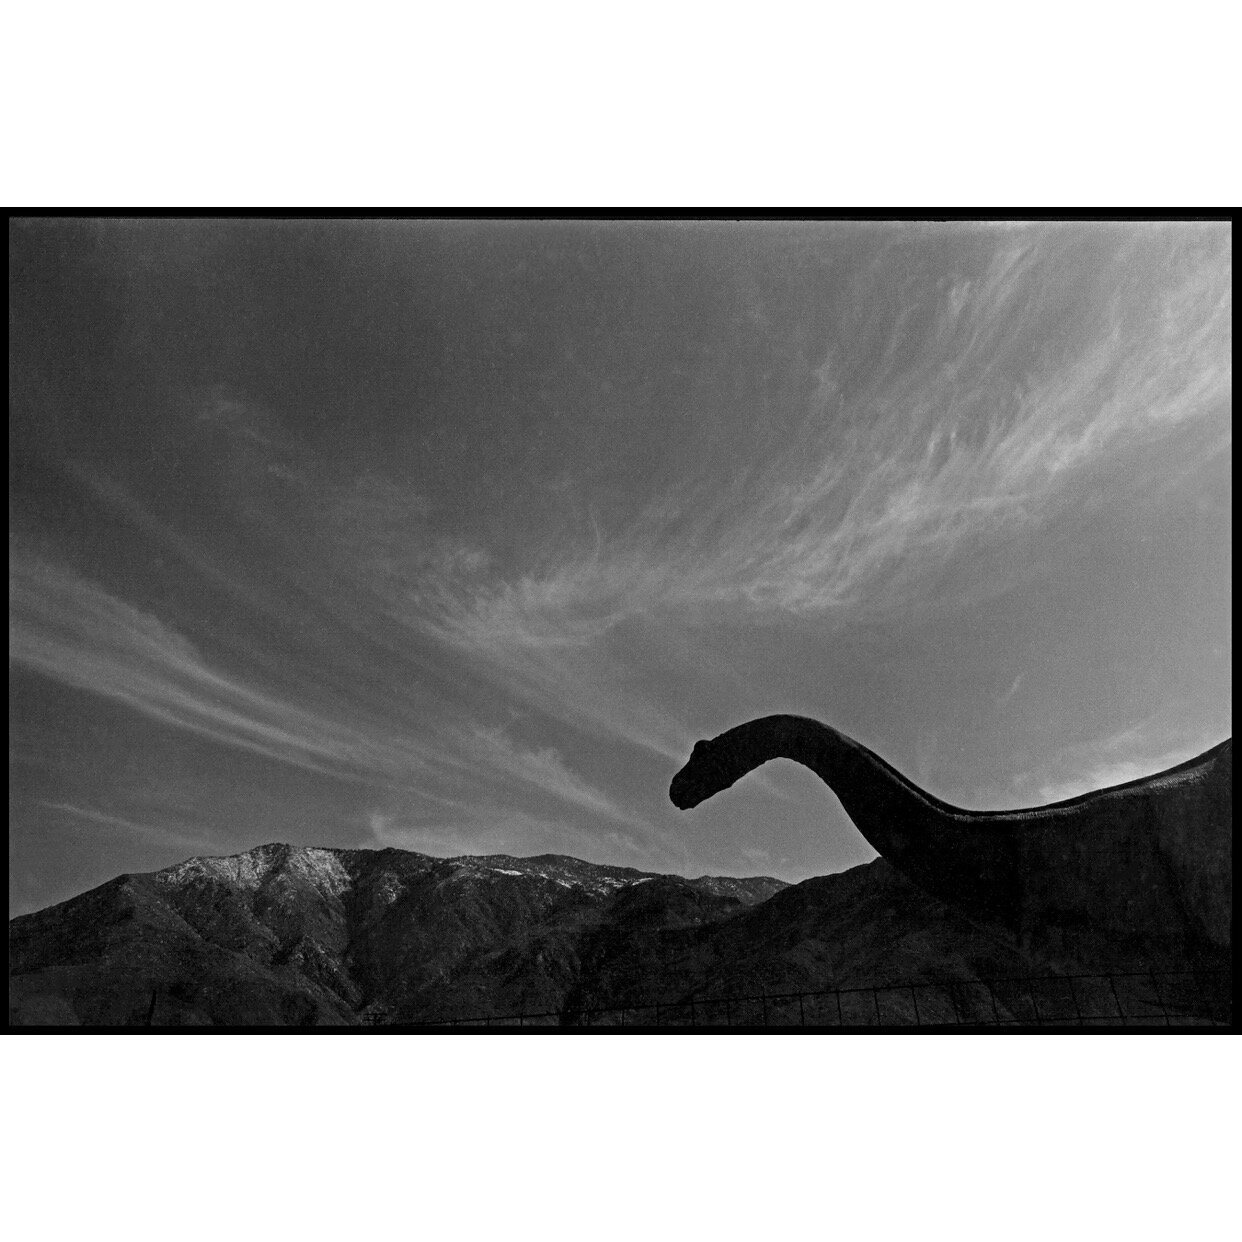 𝗧𝗶𝘁𝗹𝗲: 'Dino' | 𝗟𝗼𝗰𝗮𝘁𝗶𝗼𝗻: Cabazon, CA | 𝗬𝗲𝗮𝗿: 1973⁠